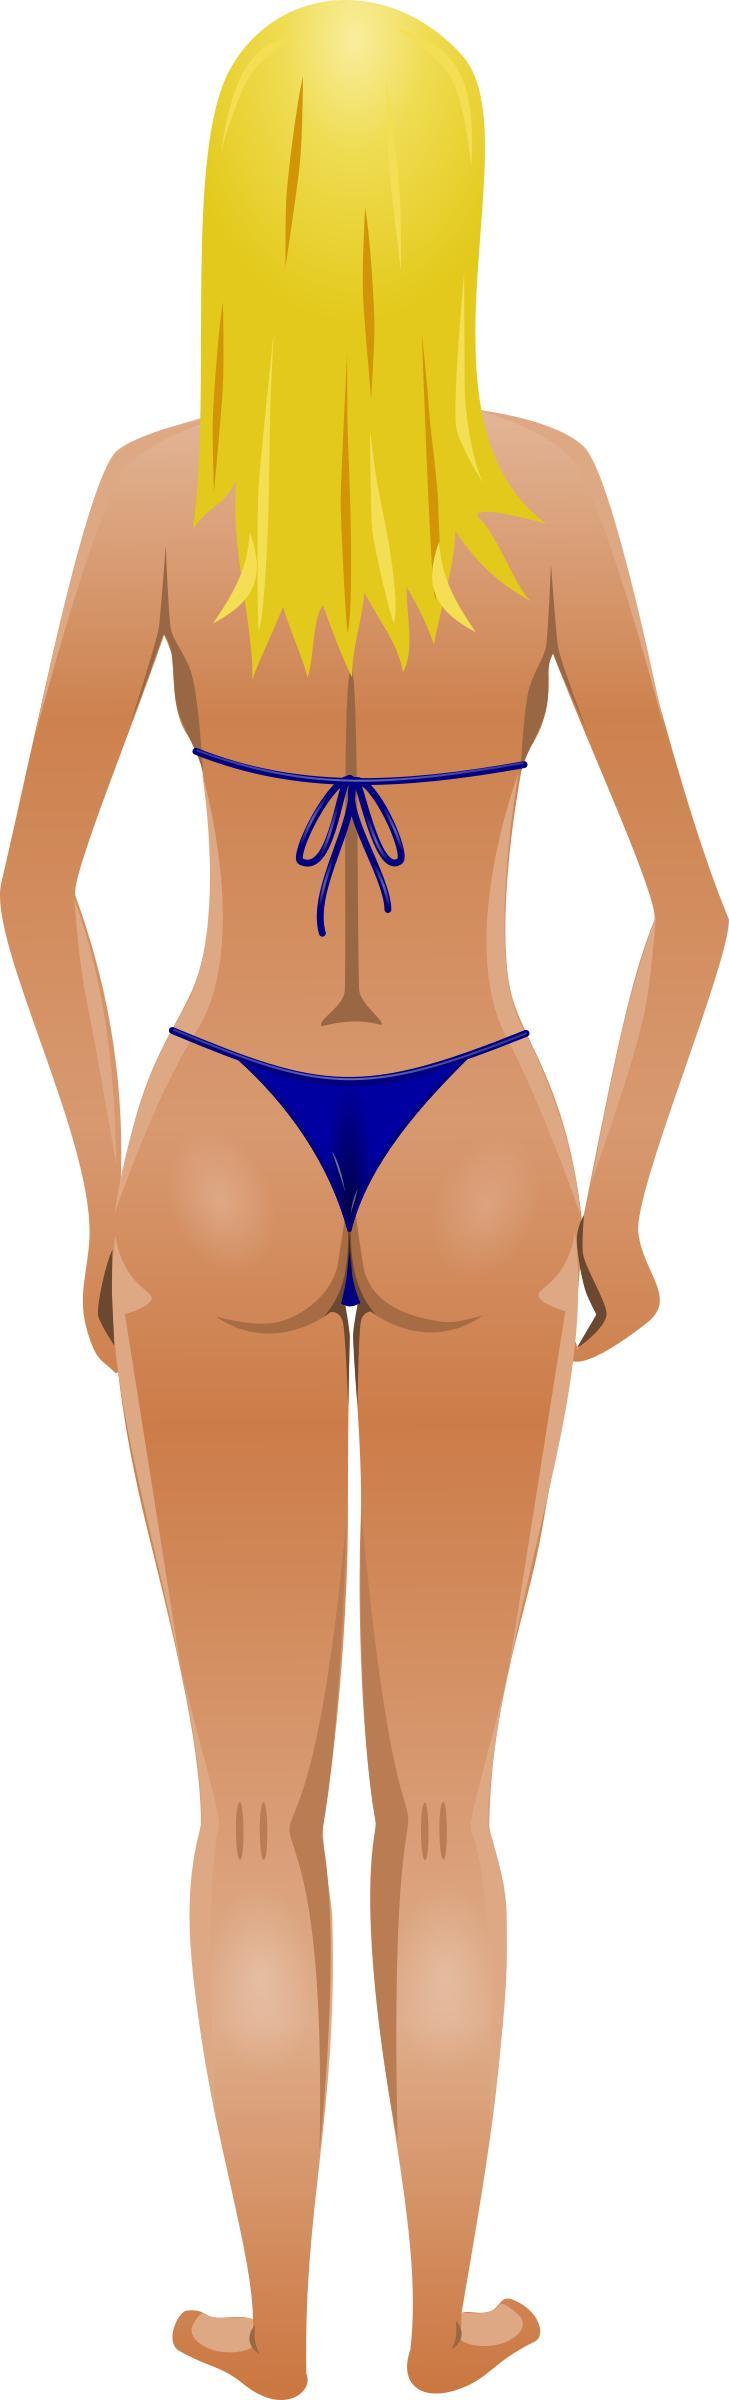 Young lady (light skin, blue bikini, blonde hair) png transparent